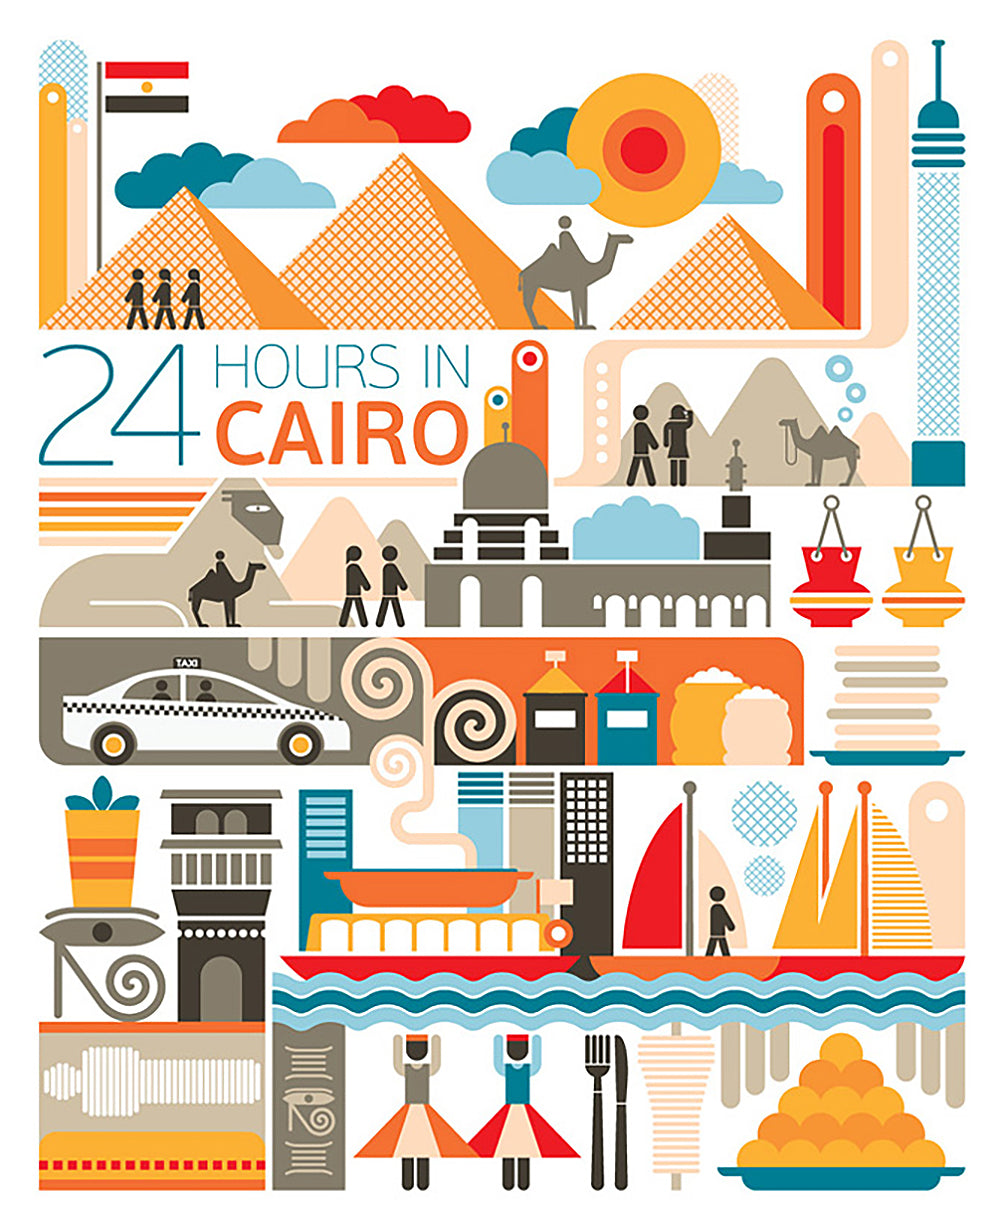 Safari Journal / Blog by Safari Fusion | 24 hours in Cairo | Modern travel posters by graphic designer Fernando Volken Togni